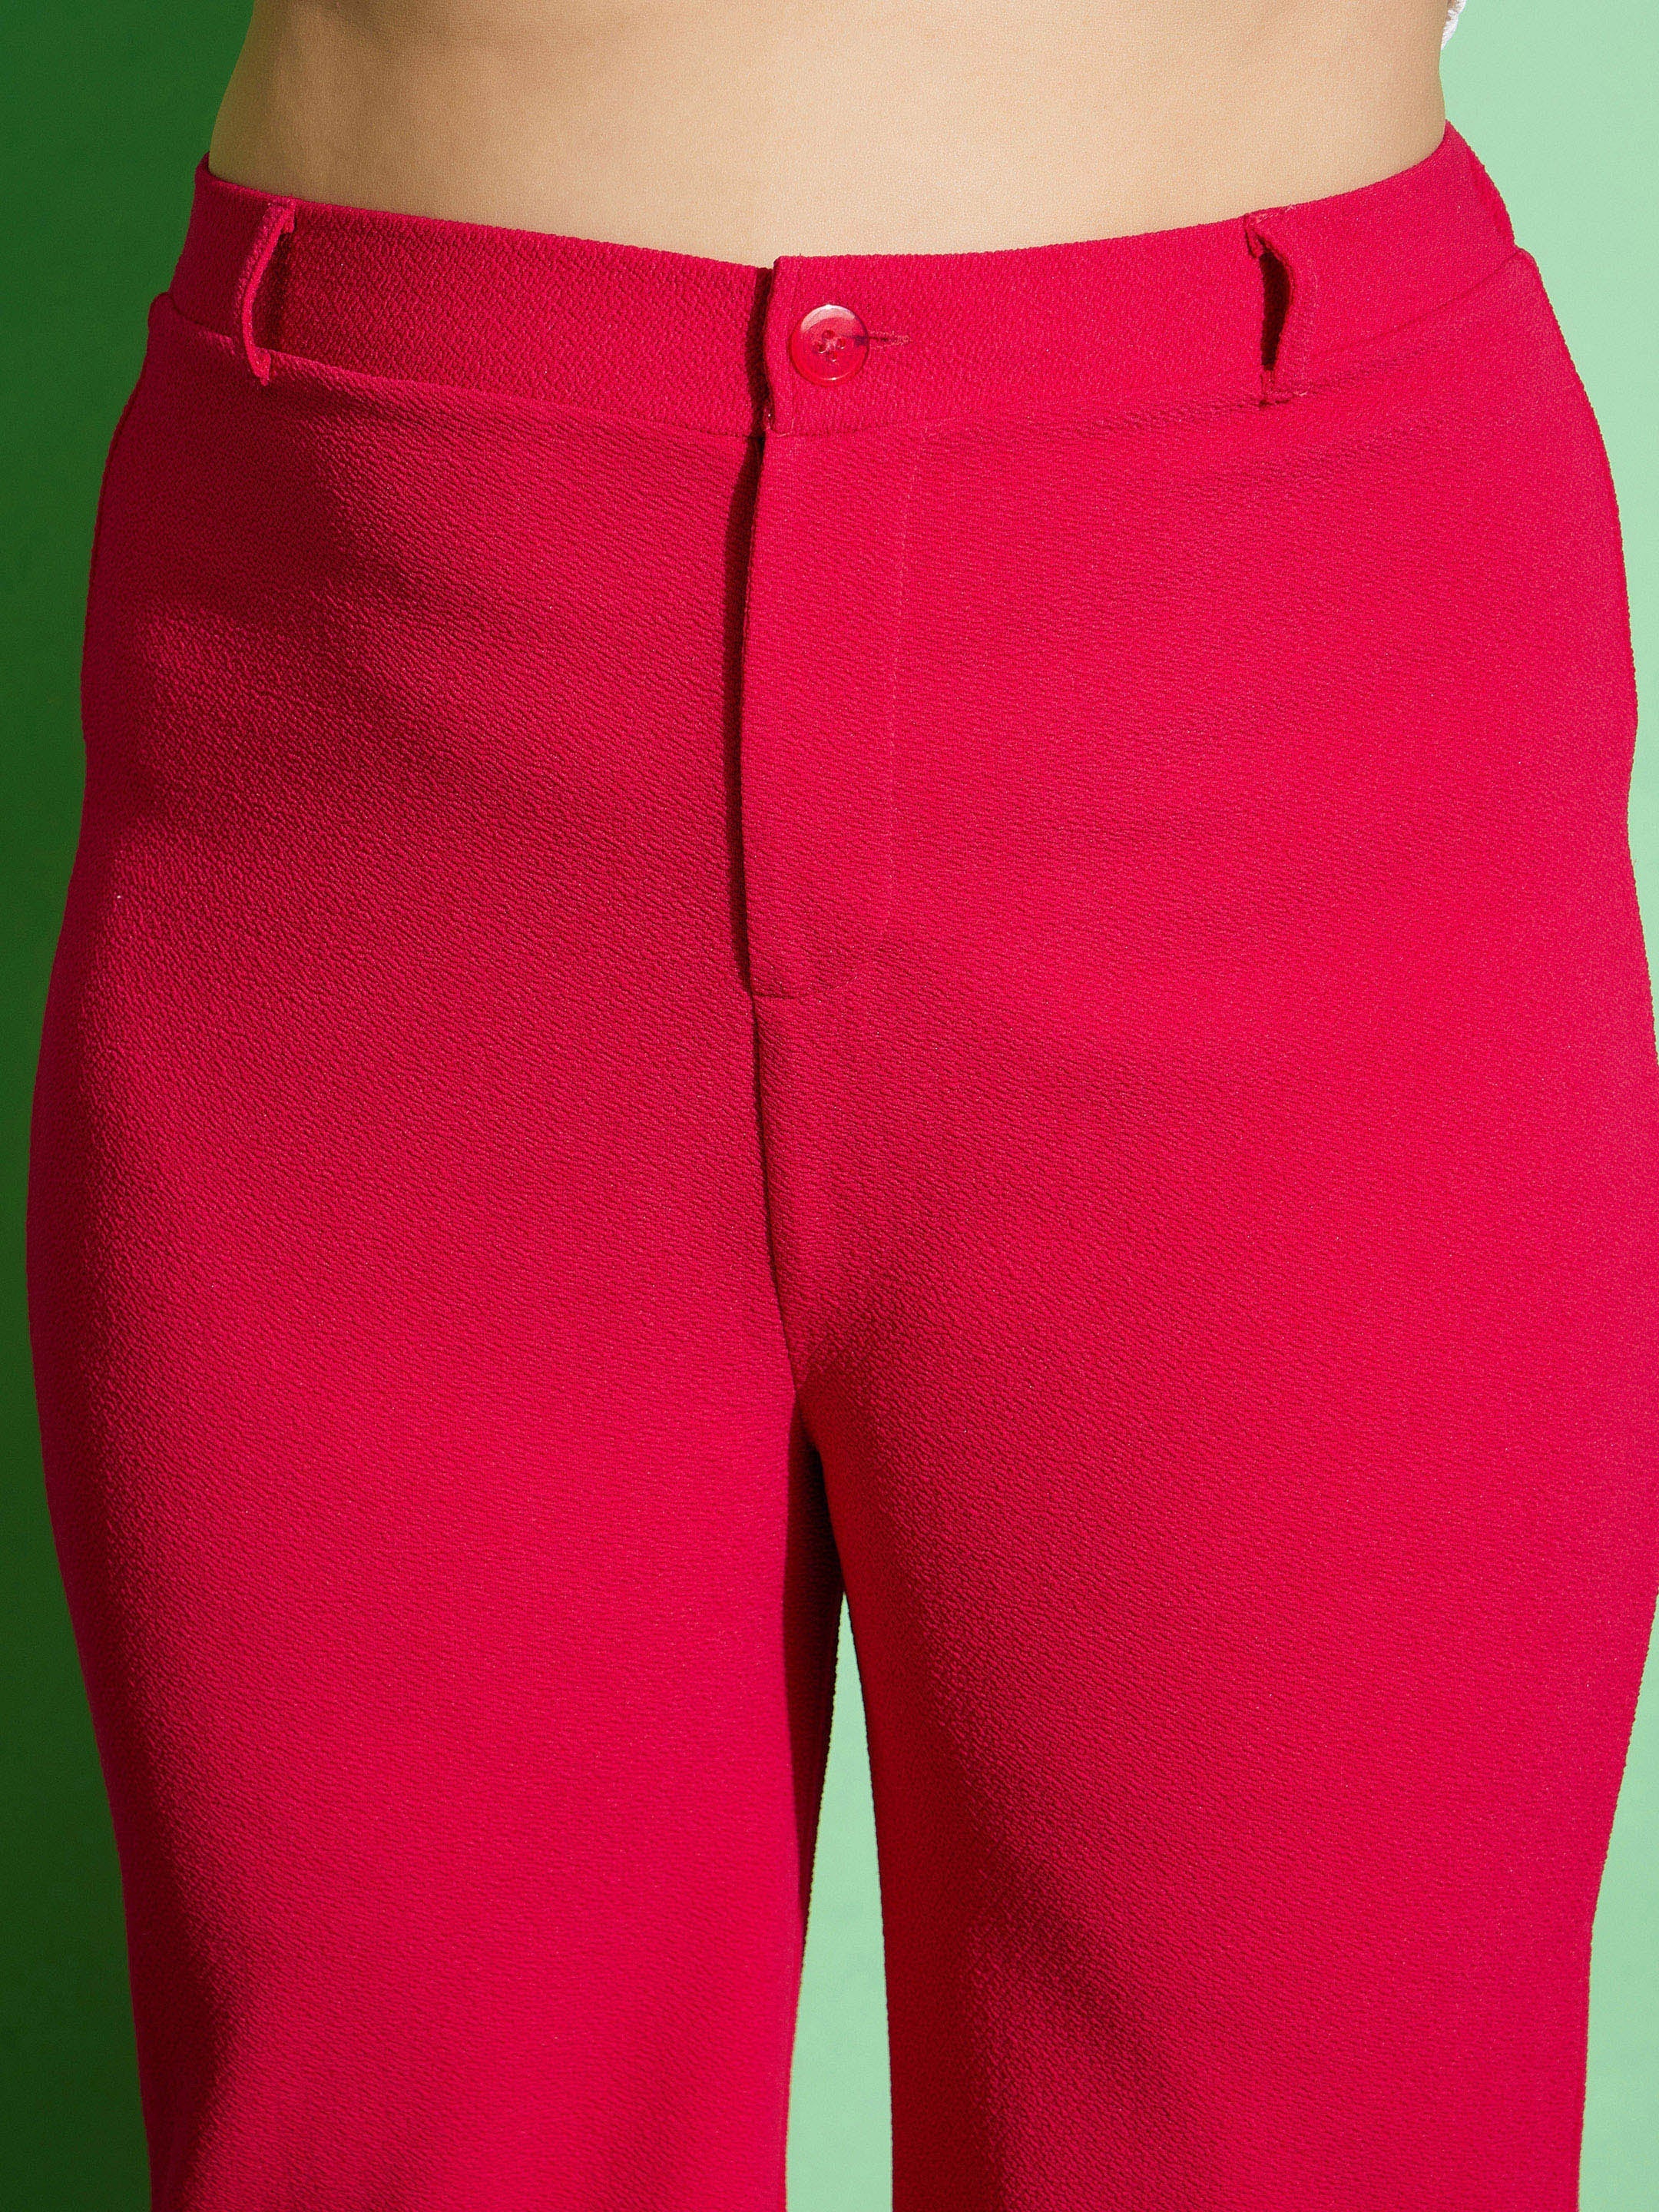 Women's Fuchsia Bell Bottom Pants - SASSAFRAS